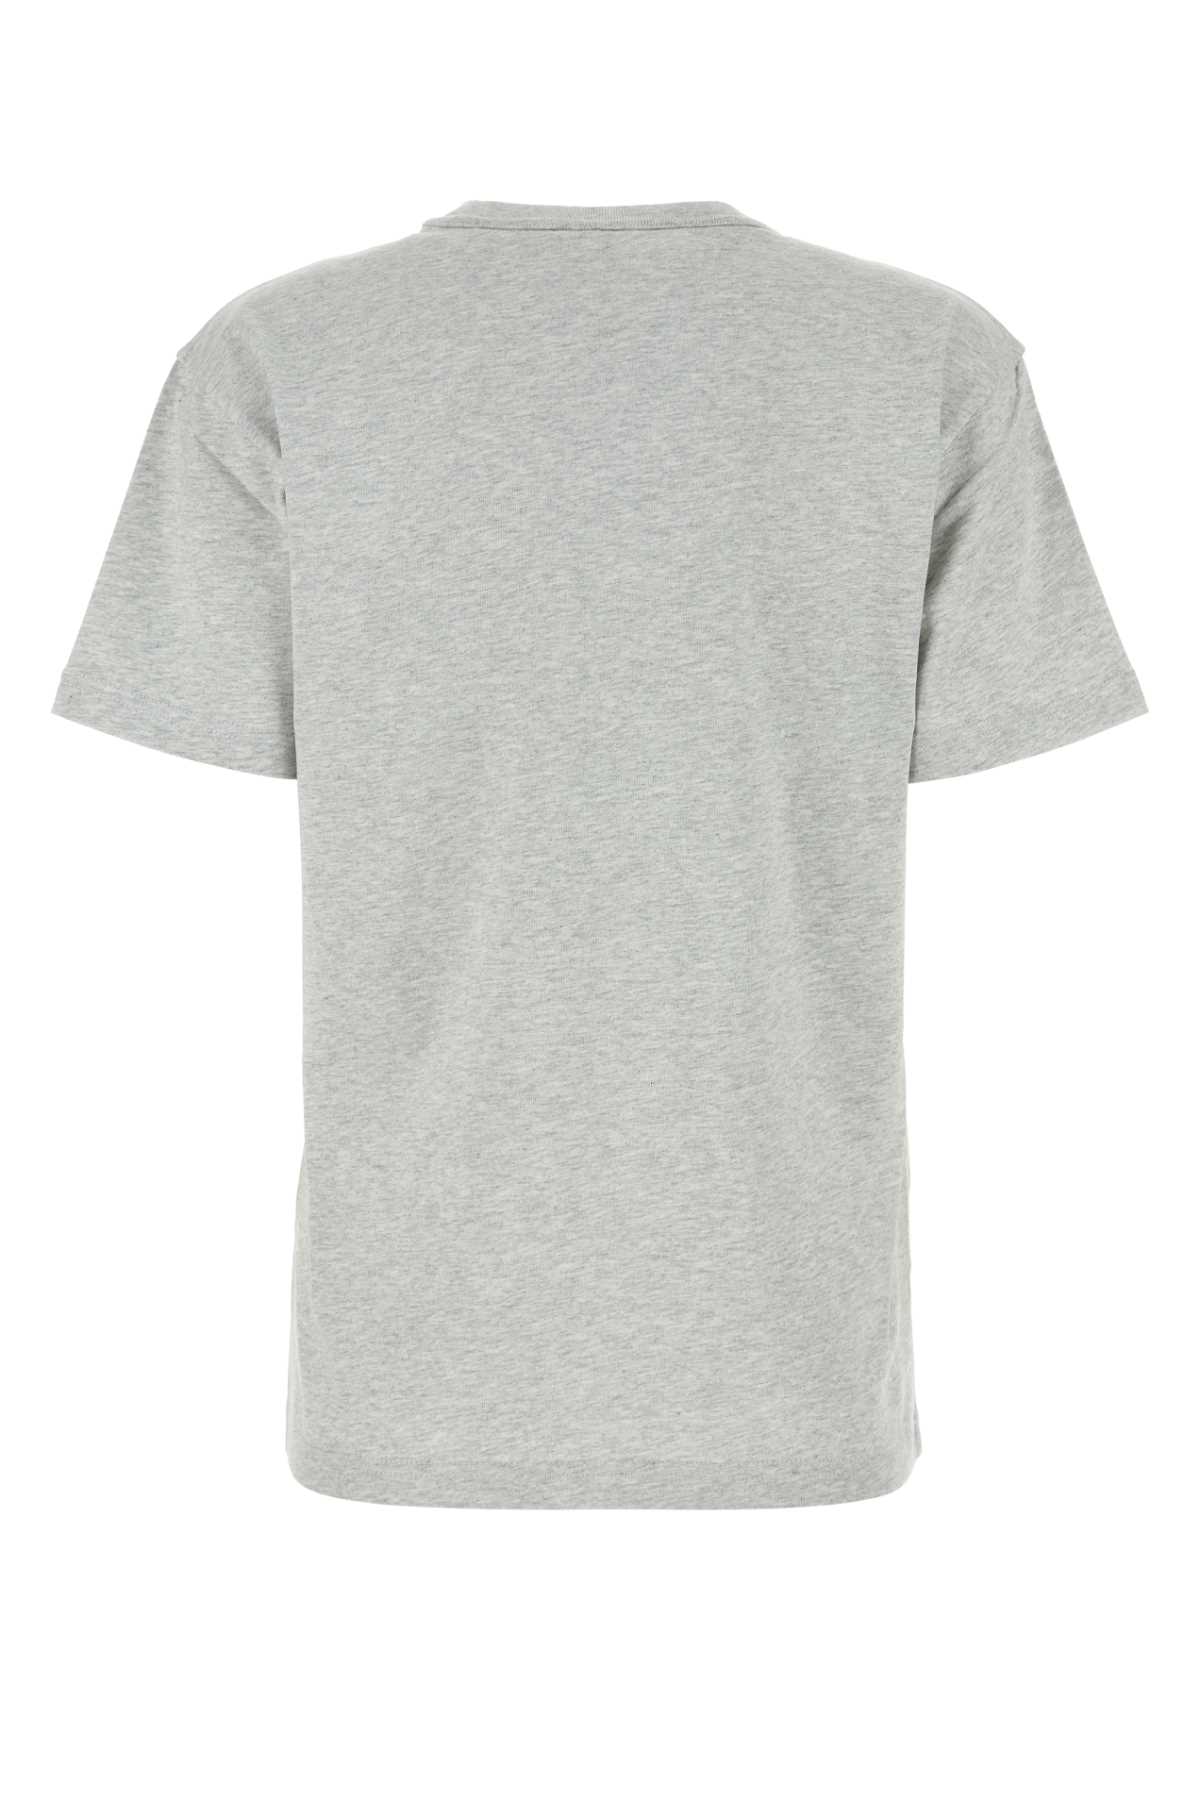 Alexander Wang T Melange Grey Cotton Oversize T-shirt In Lightheathergrey